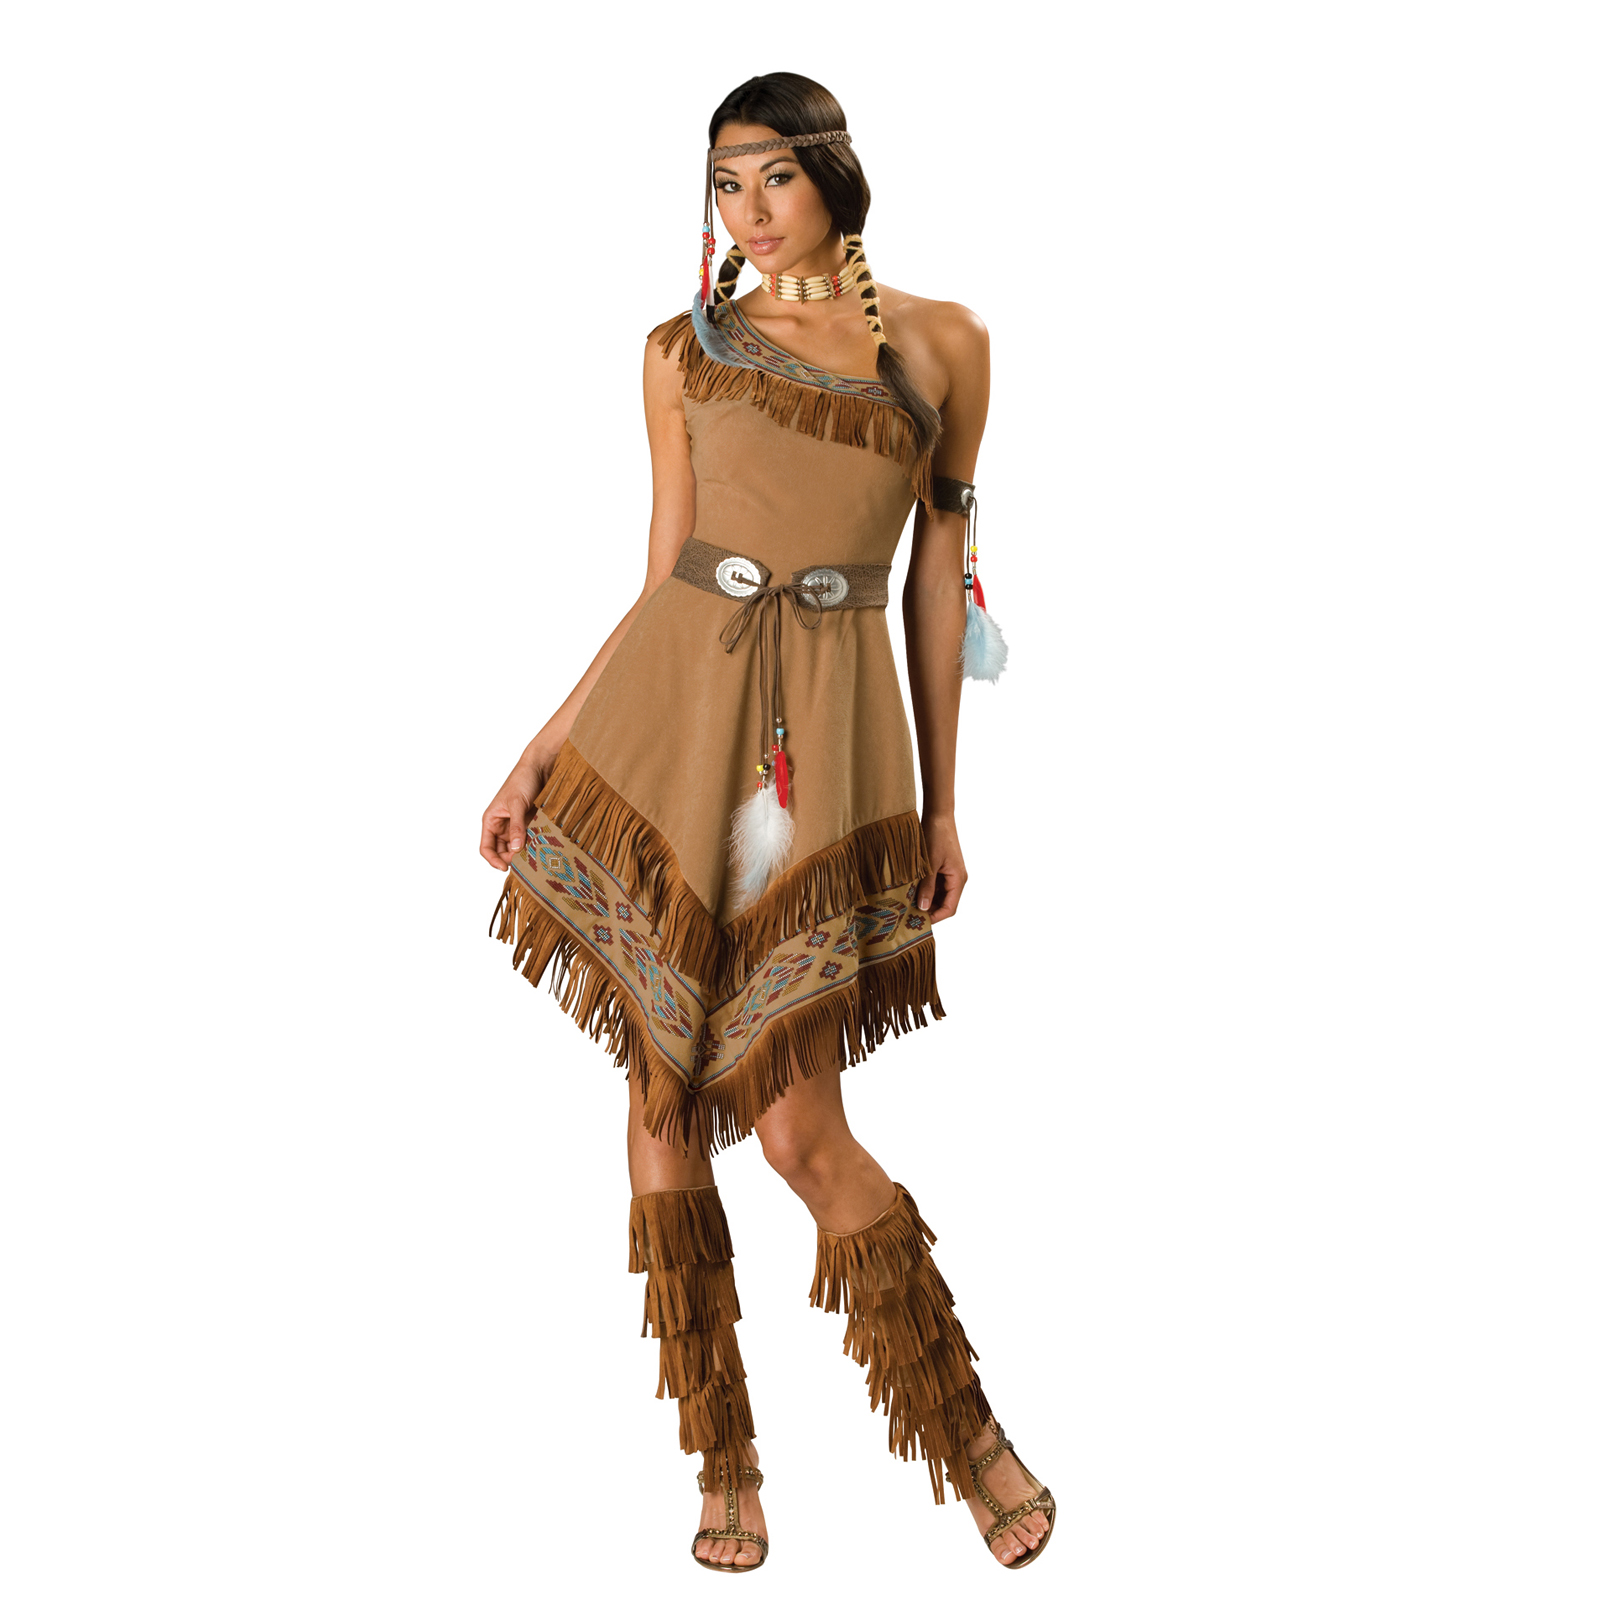 Women&#8217;s Indian Maiden Costume